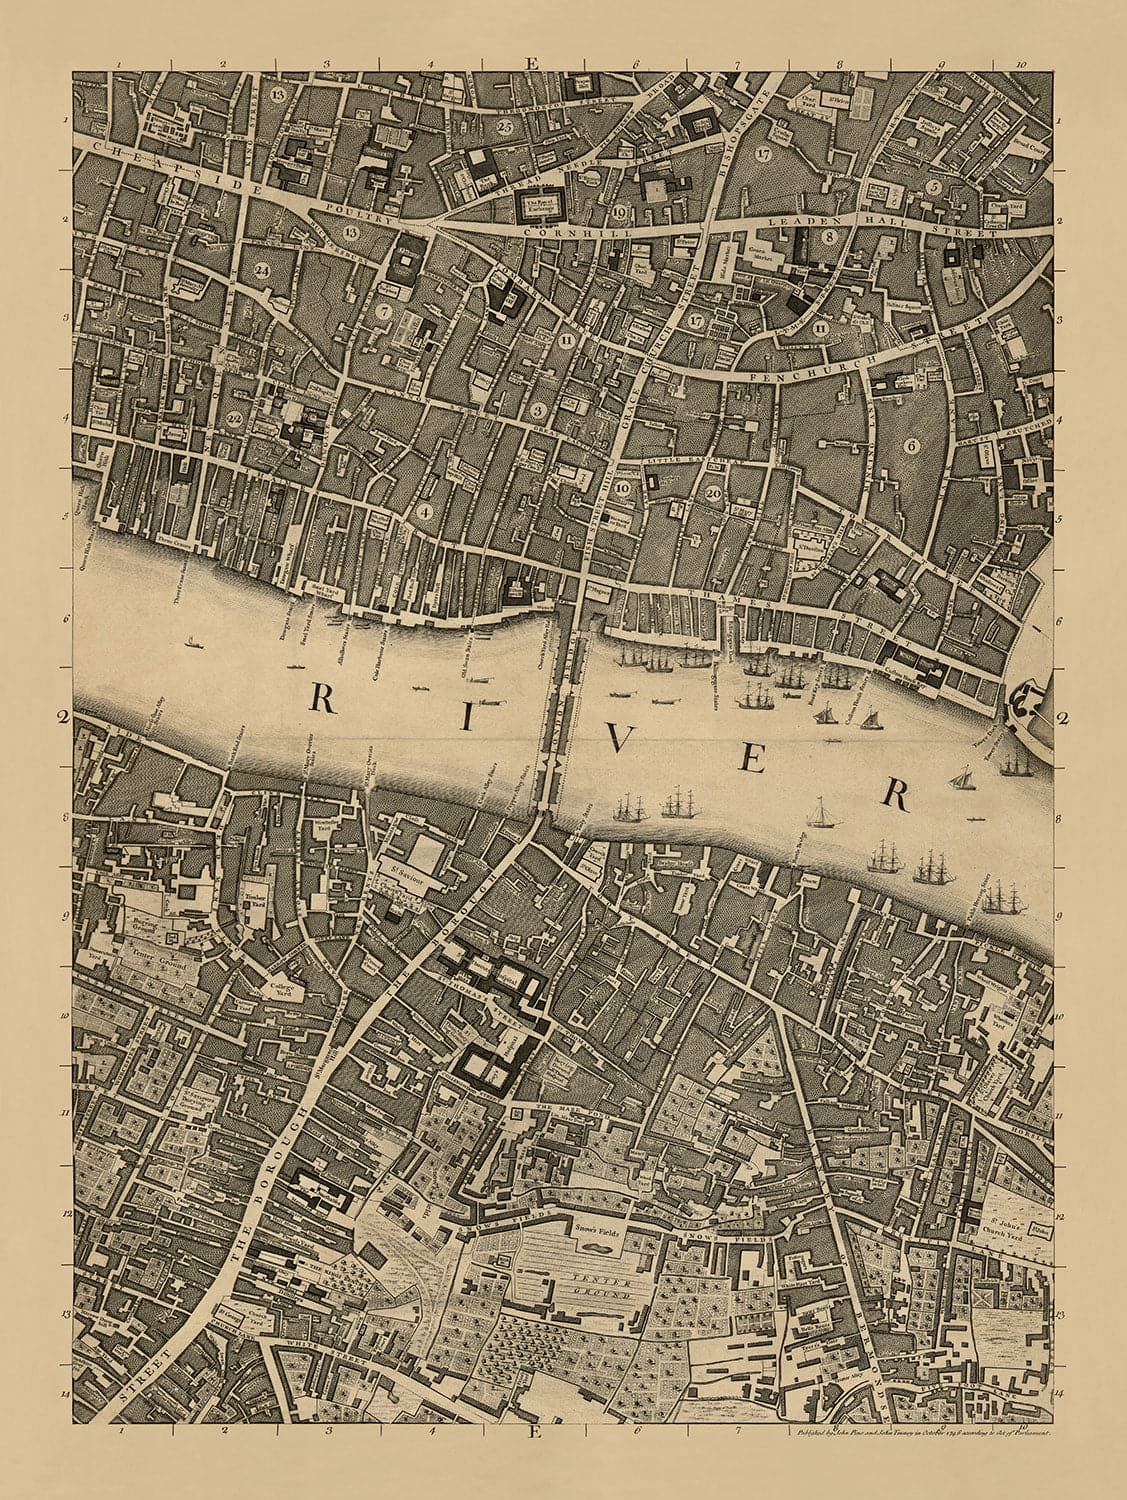 Old Map of London, 1746 by John Rocque, E2 - London Bridge, City of London, Borough, Bermondsey, Monument, Cannon, Bank